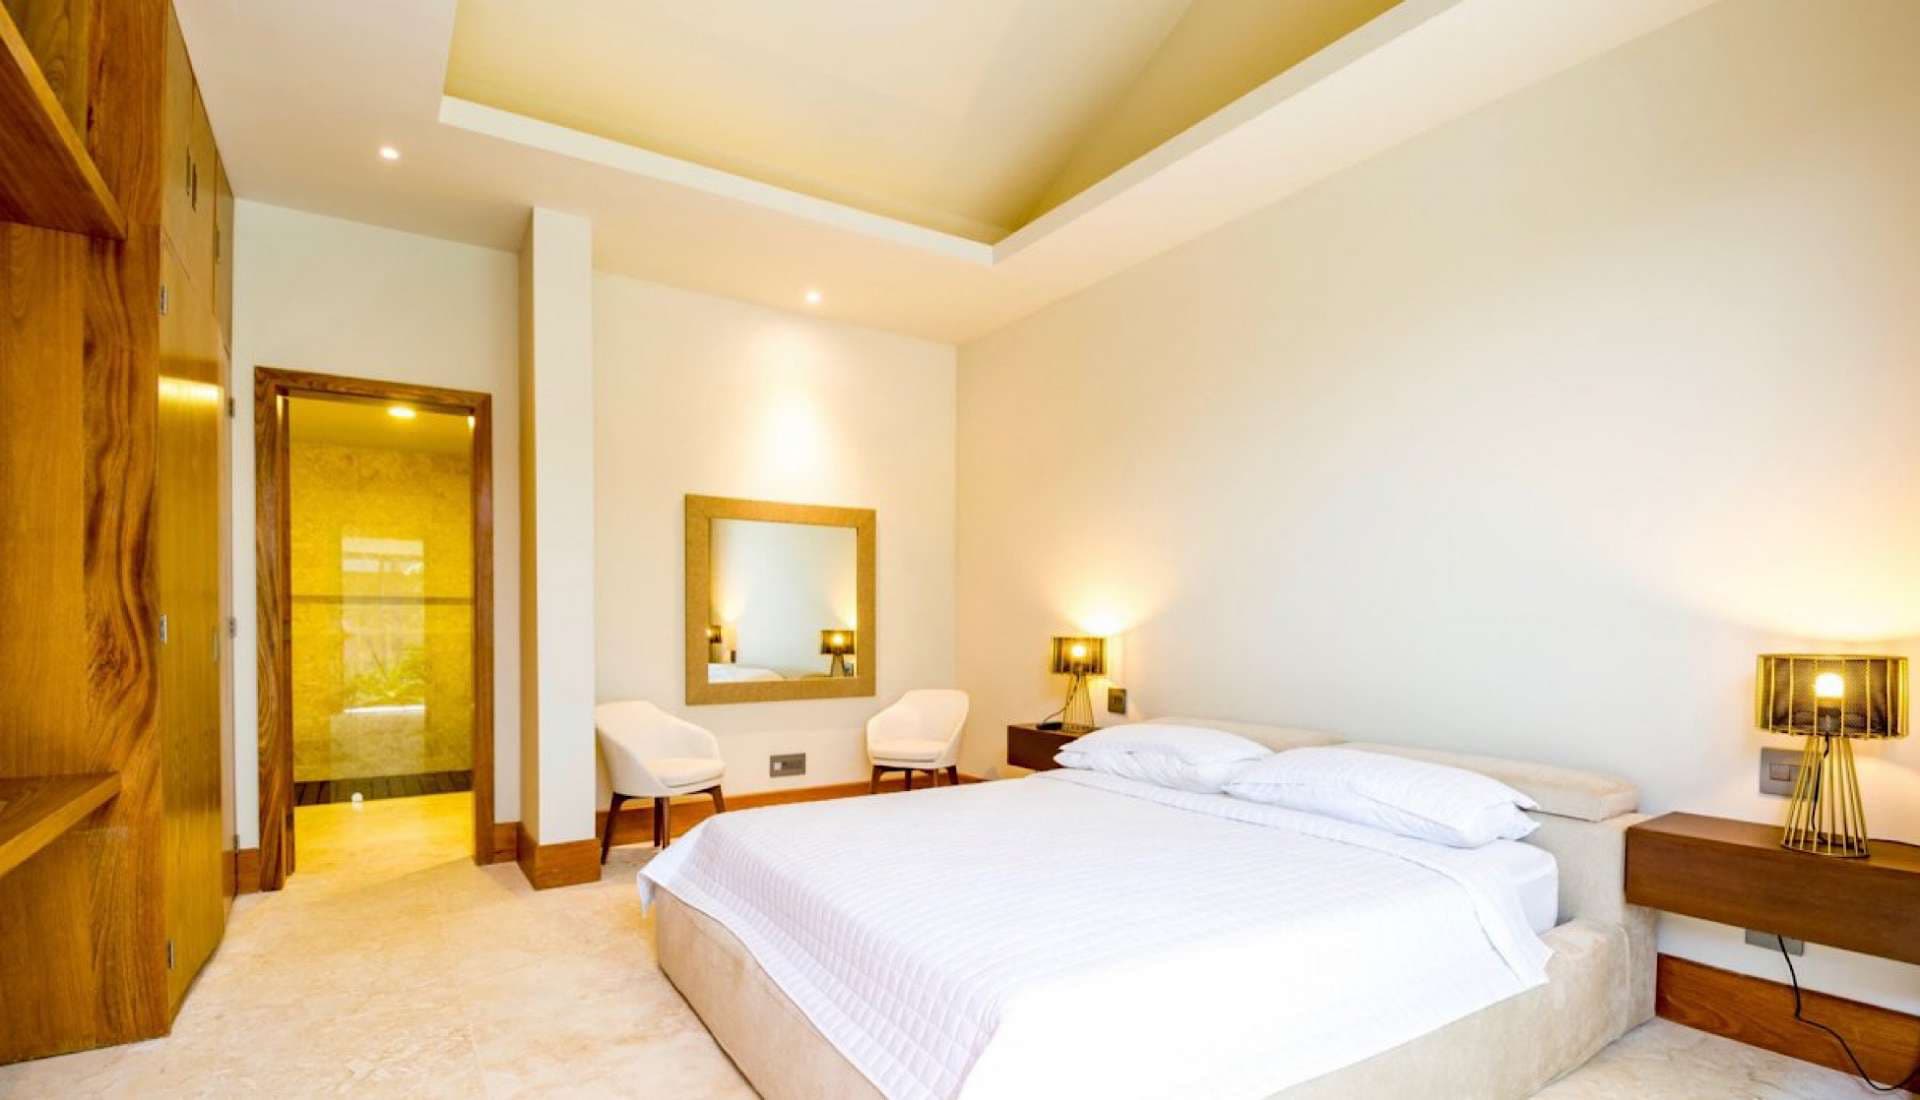 7 Bedroom Villa For Sale Villa Caleton Casa De Campo Lp04940 1ab7aaba9c7a8e00.jpeg